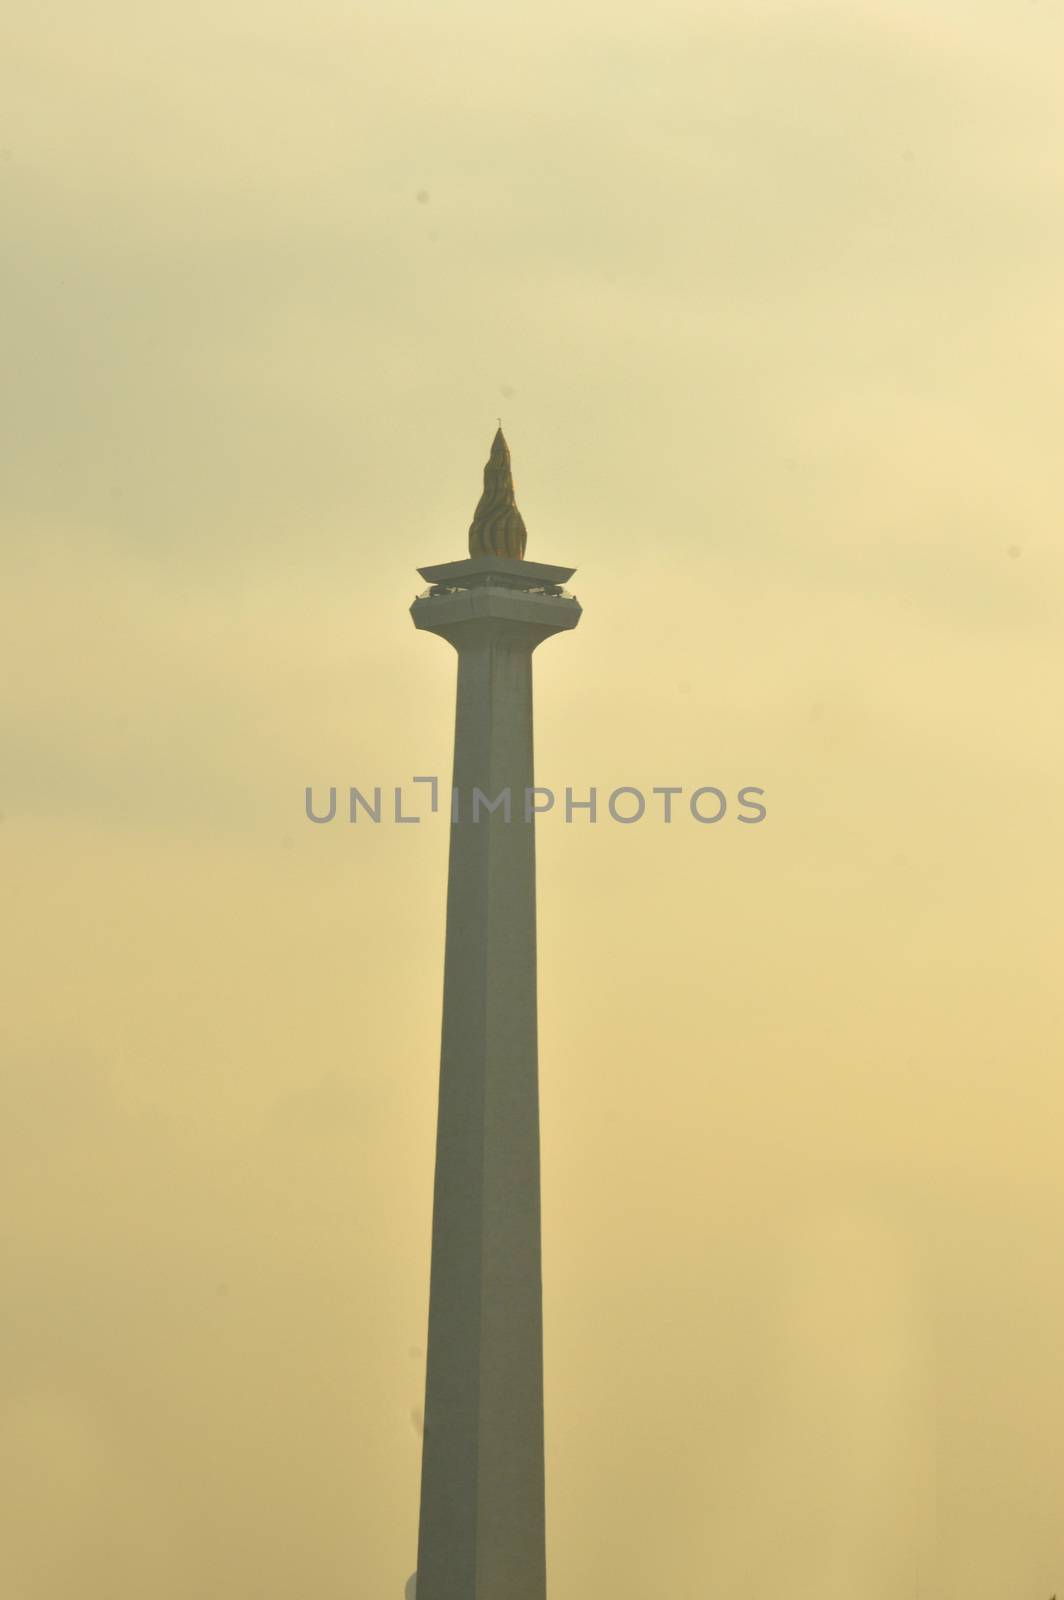 Jakarta City, Indonesia by antonihalim